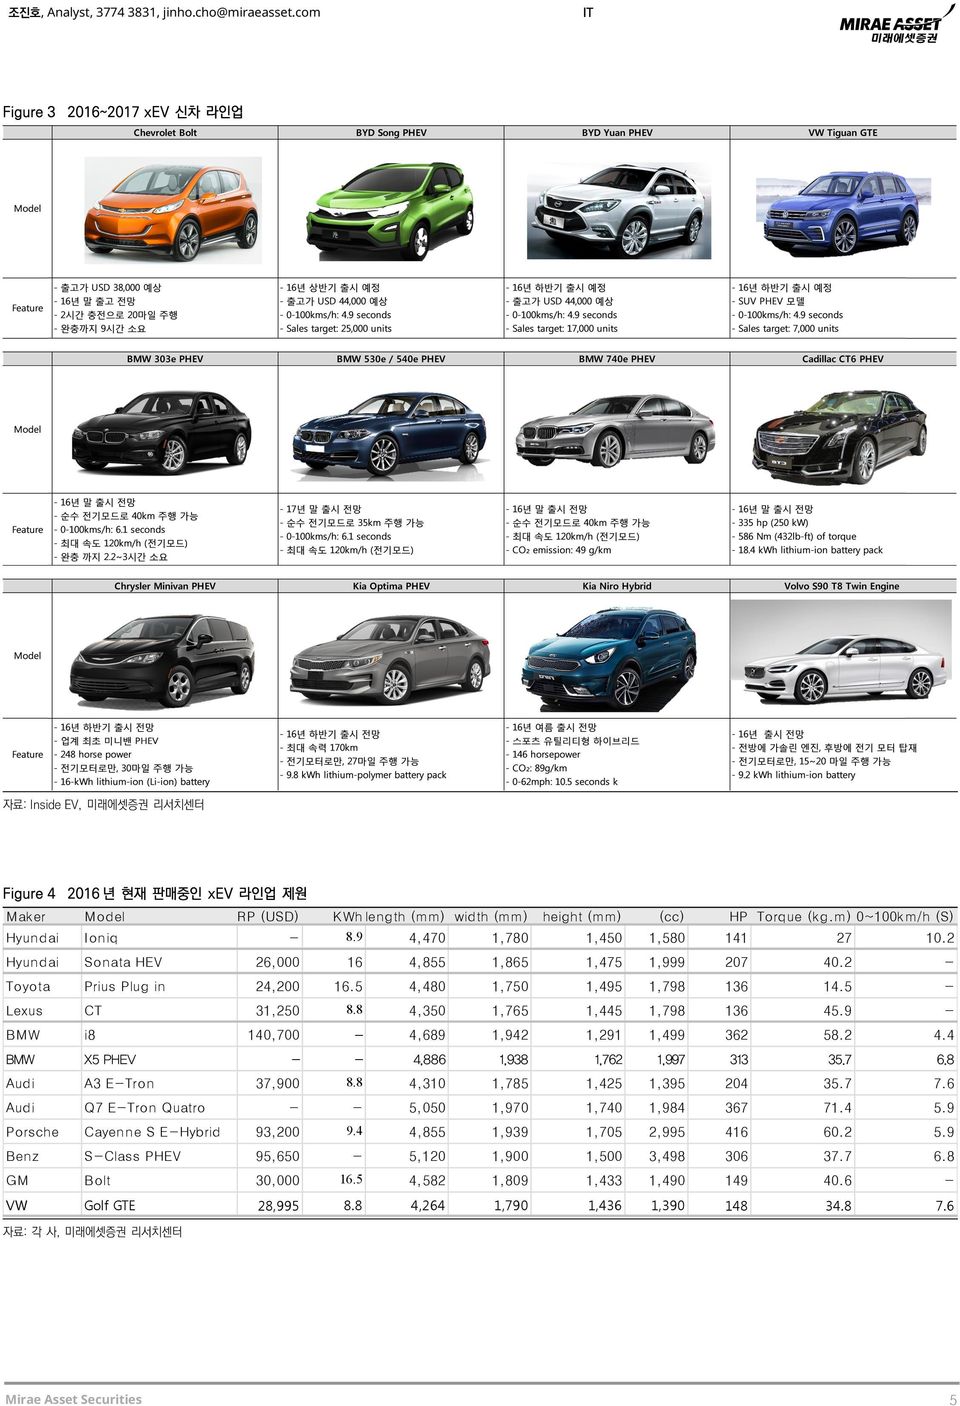 Plug g in 24,200 16.5 Lexus CT 31,250 BMW i8 140,700 BMW X5 PHEV Audi on A3 E-Tro - KWh length (mm) width (mm)) 8.9 4,4 470 1,780 0 height (mm)) (cc) 1,450 0 1,580 141 HP Torque (kg.